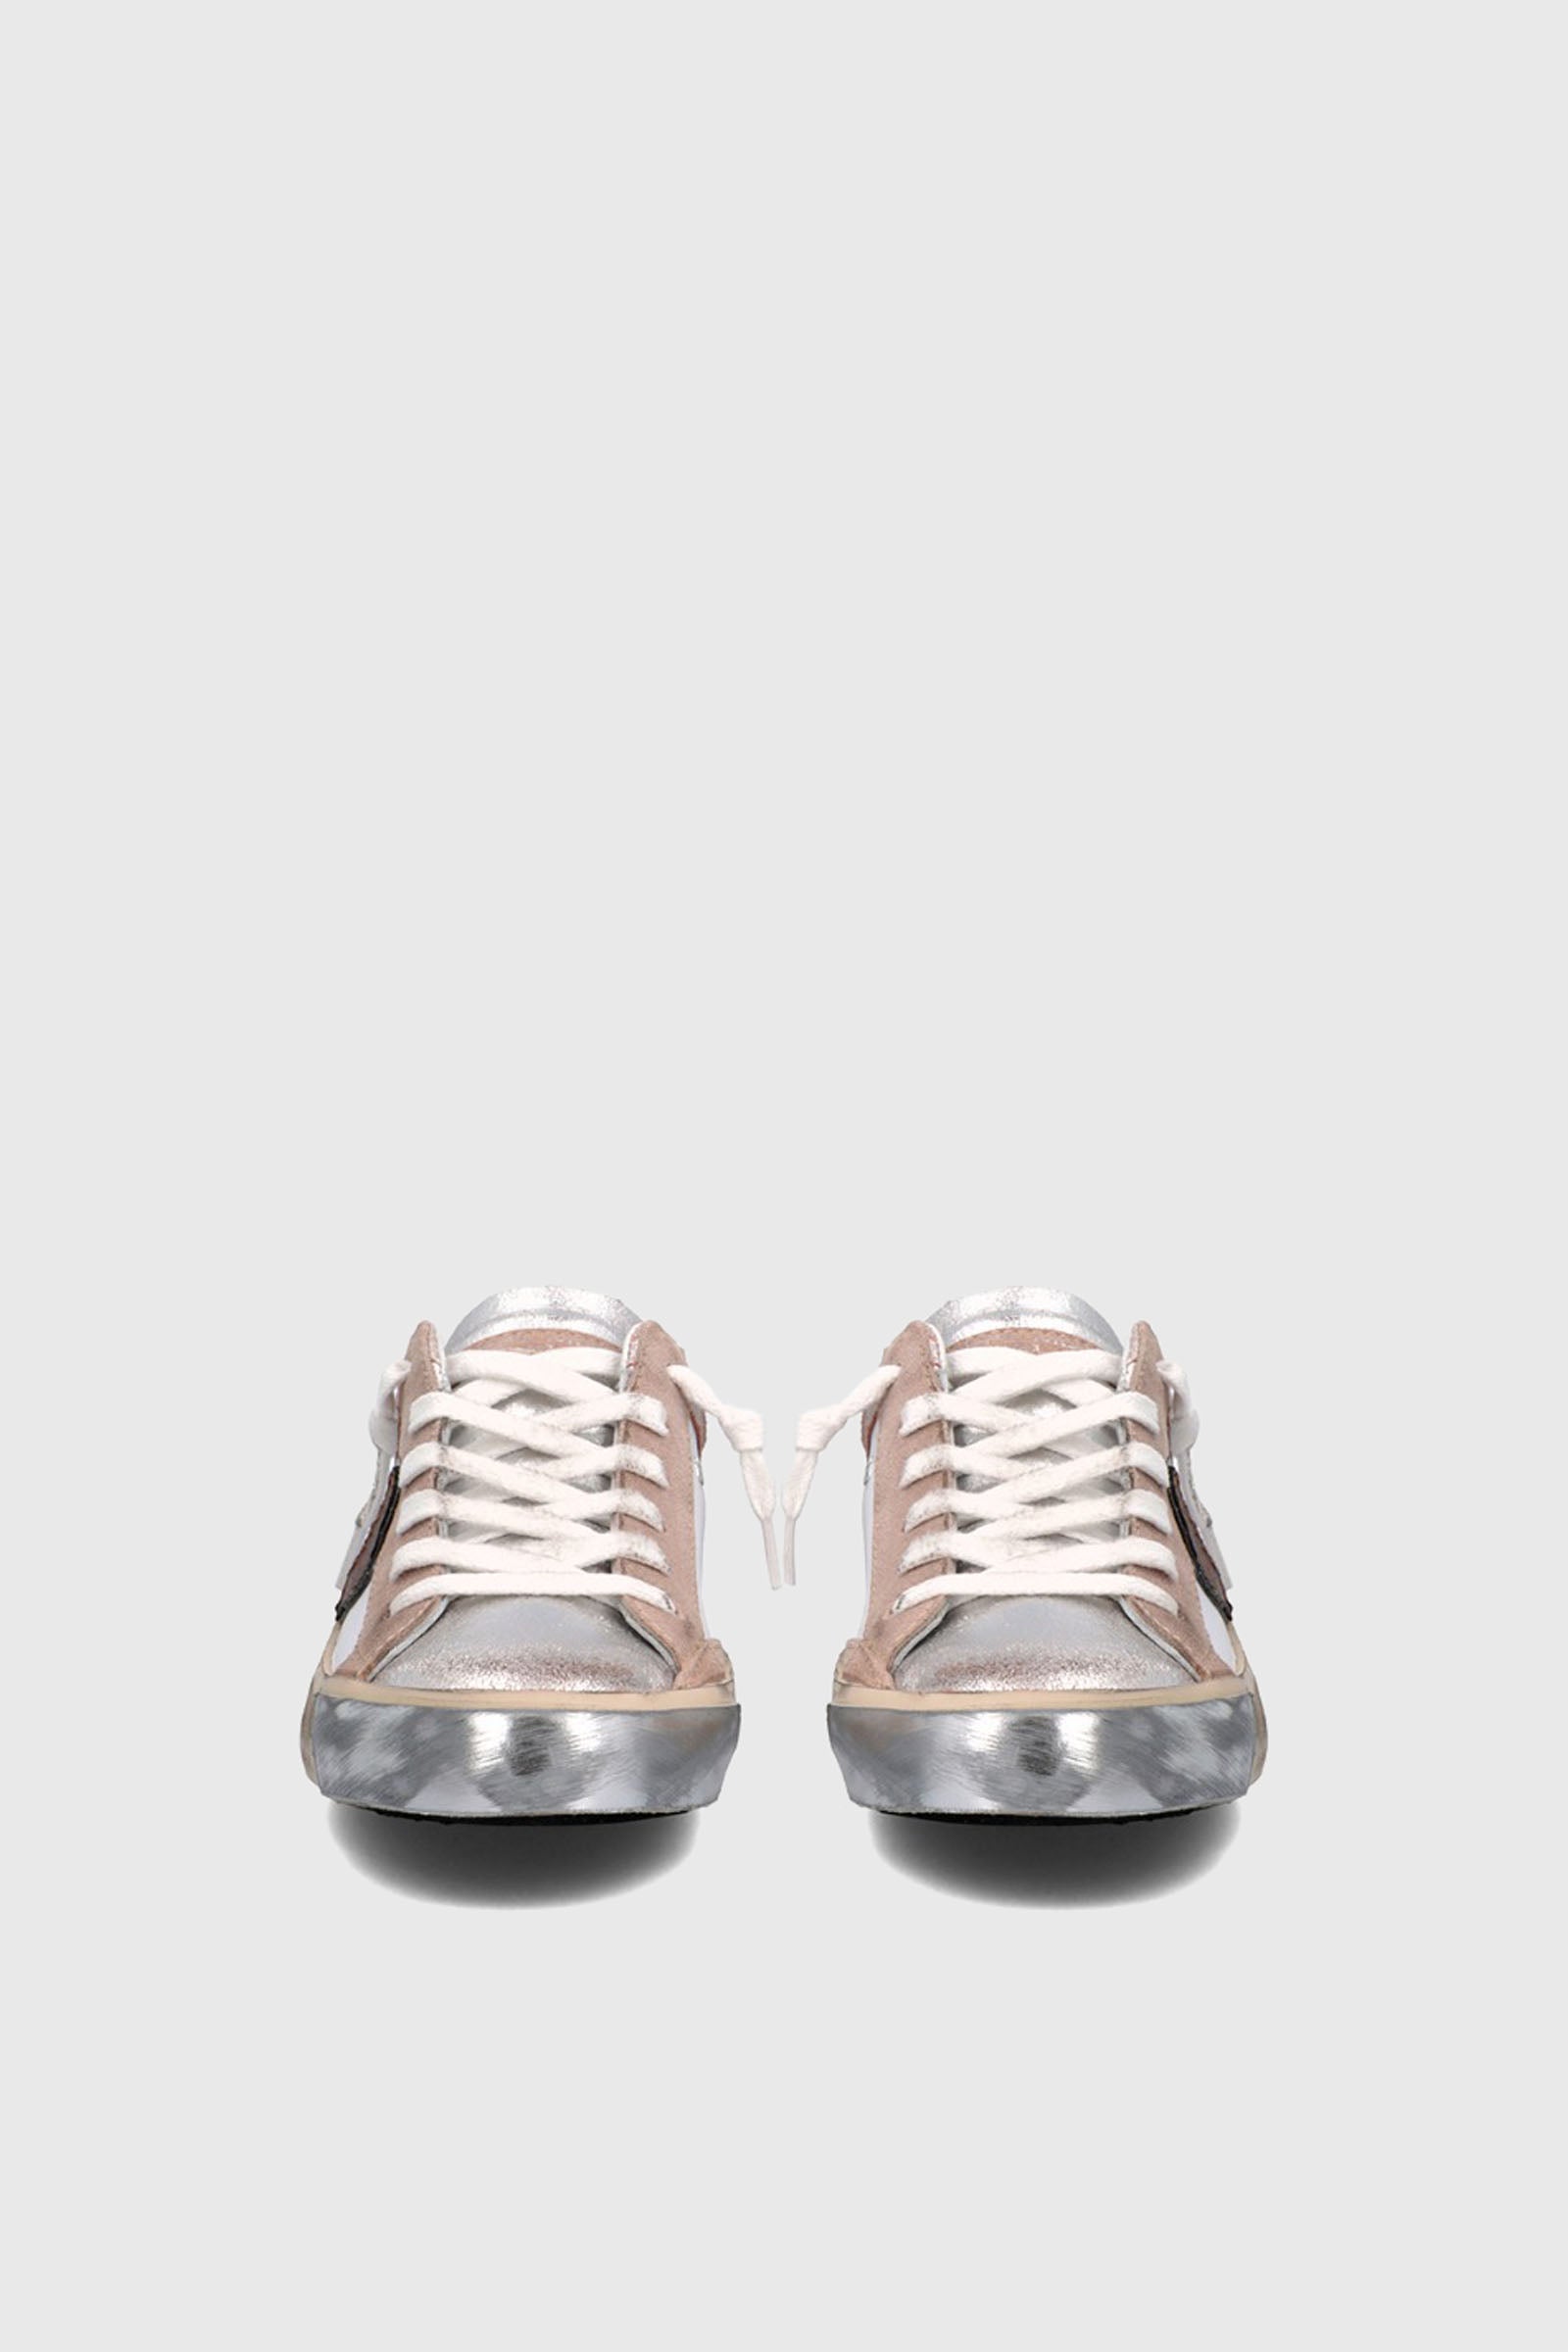 Philippe Model Sneakers PRSX Veau Croco Glitter, Pelle Bianco/Rosa - 3